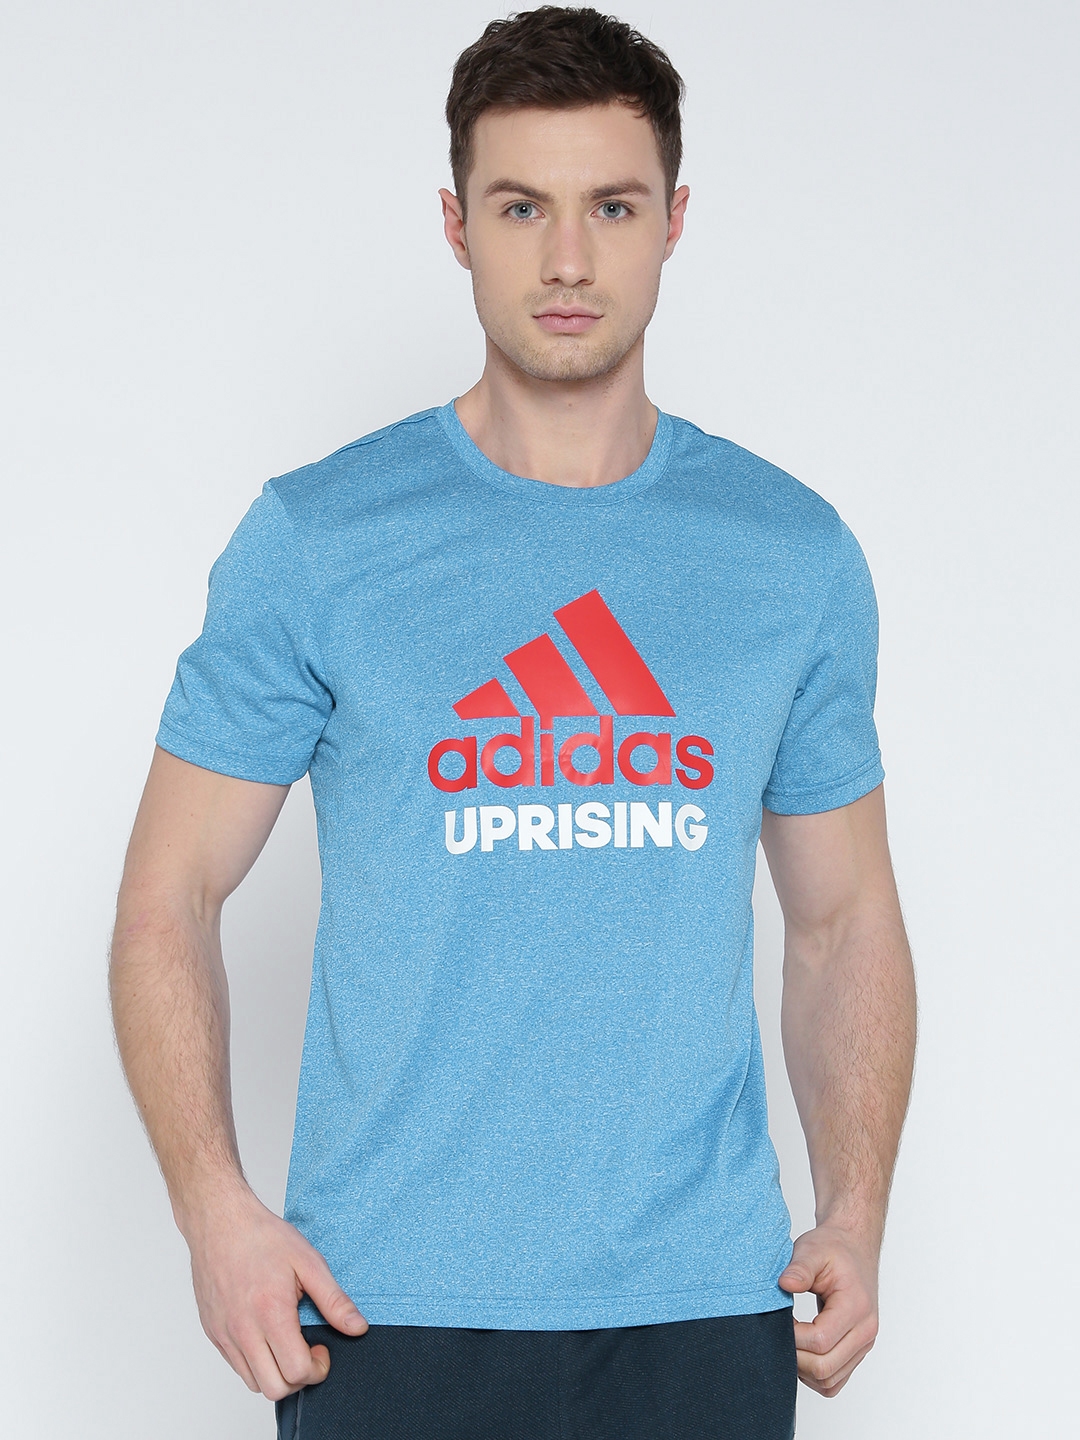 adidas uprising shirt